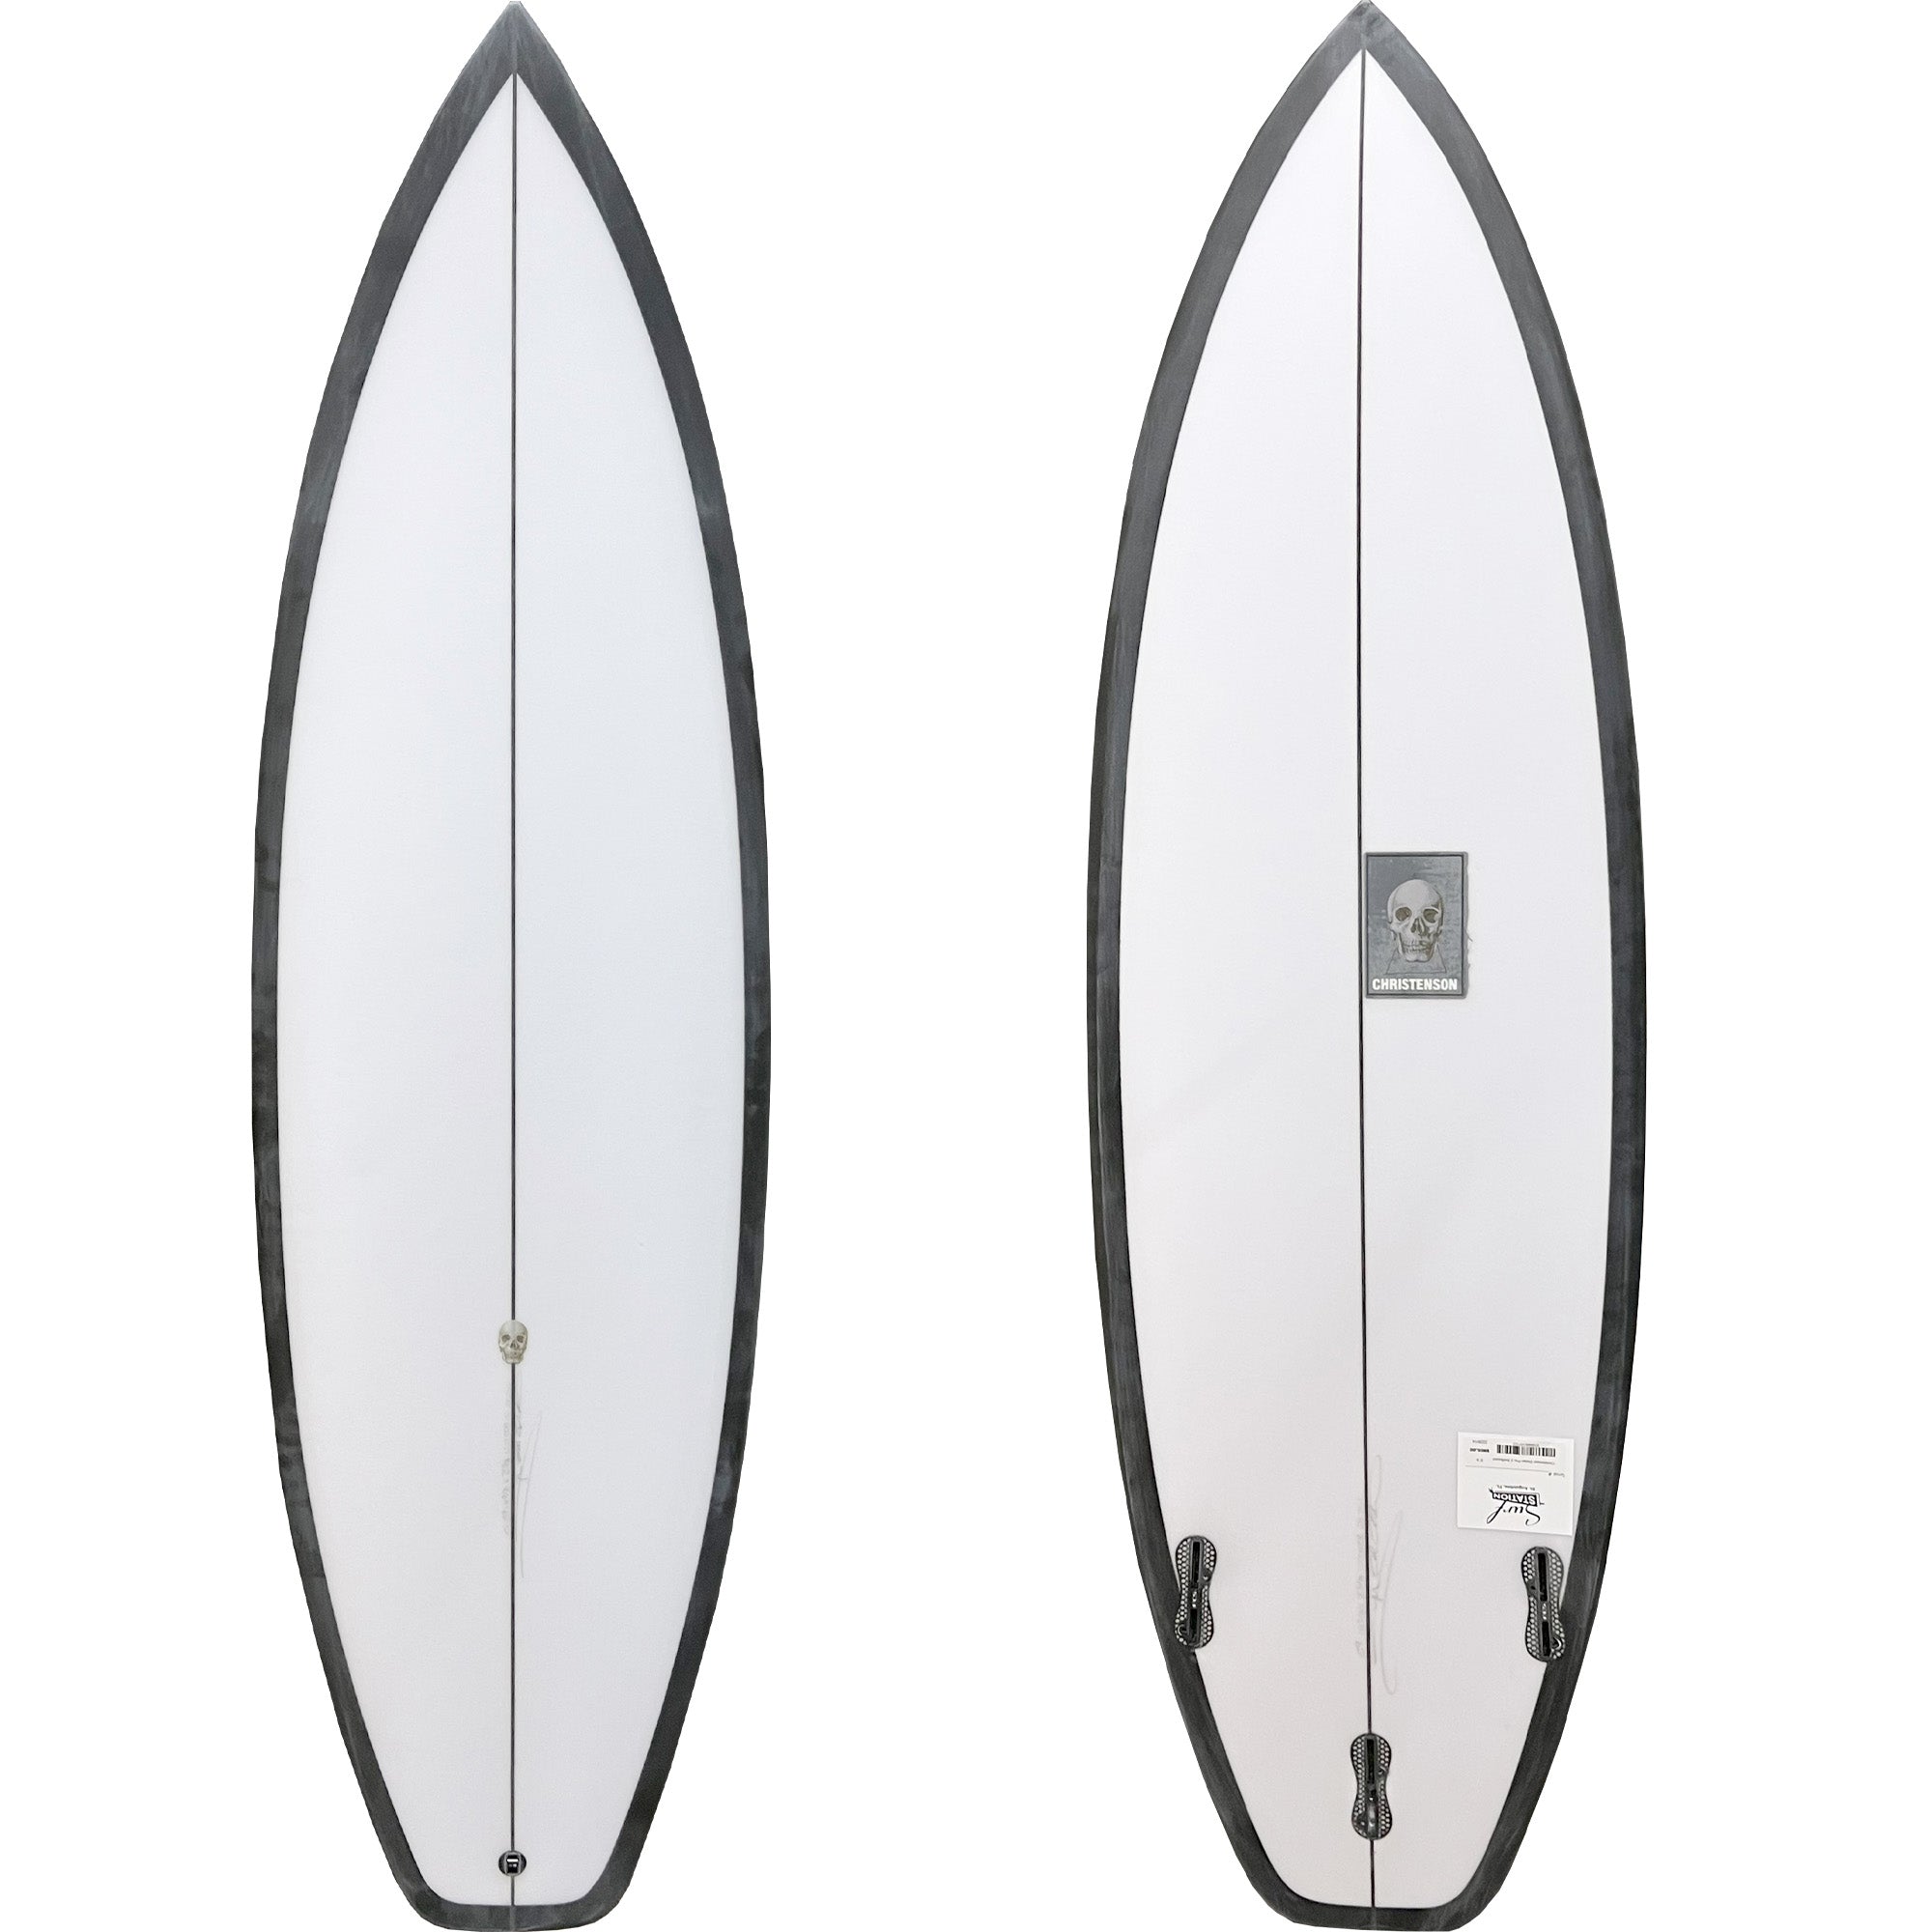 Christenson Ocean Pro 2 Surfboard